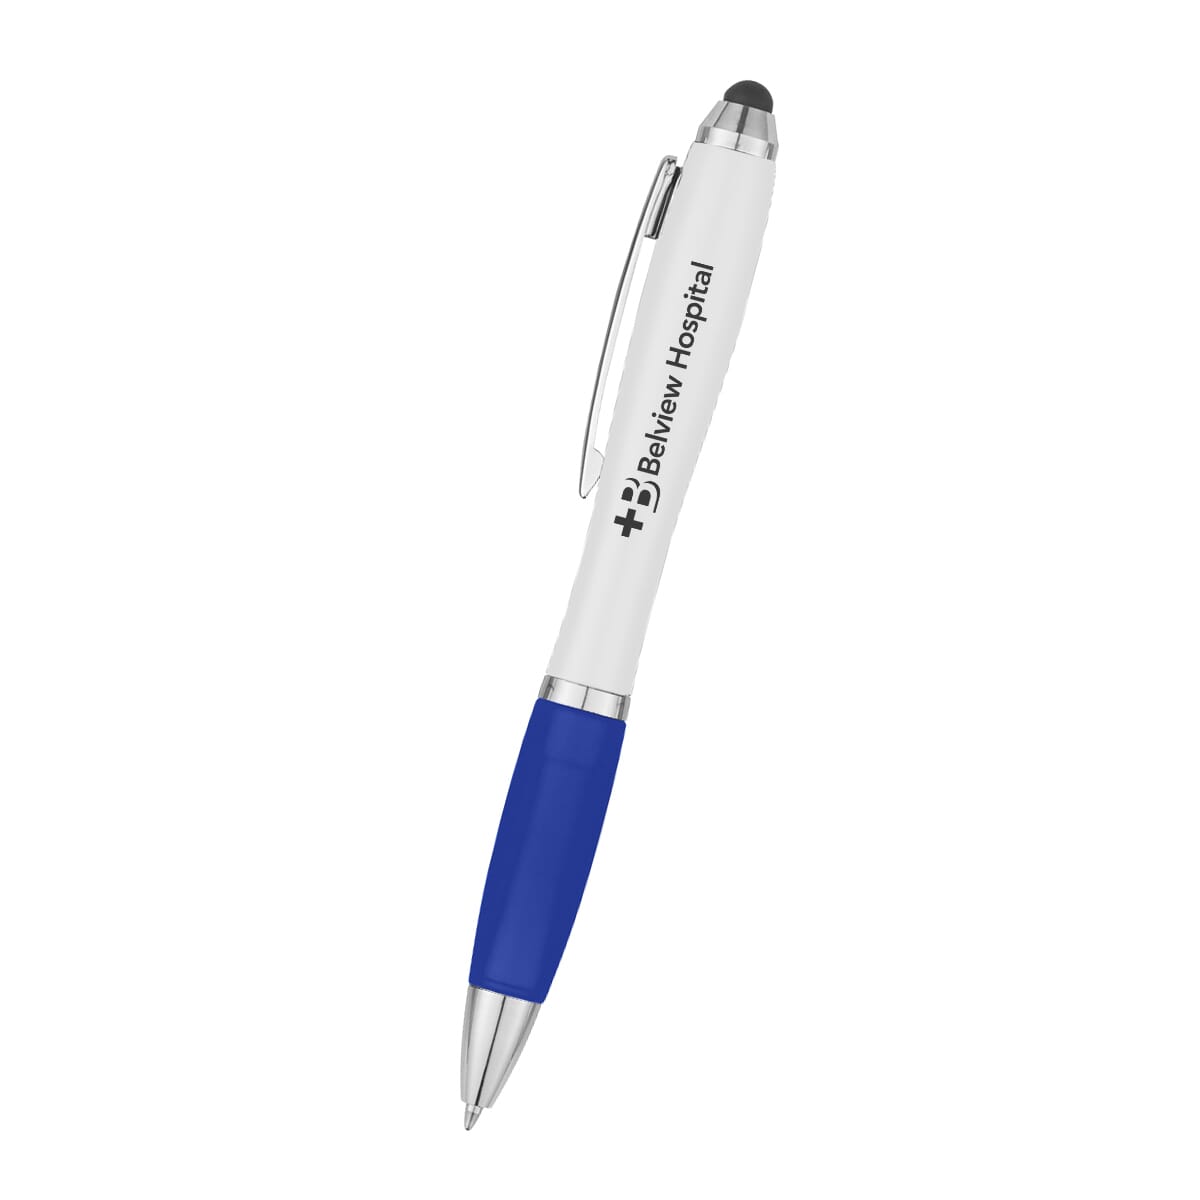 Antibcaterial stylus pen